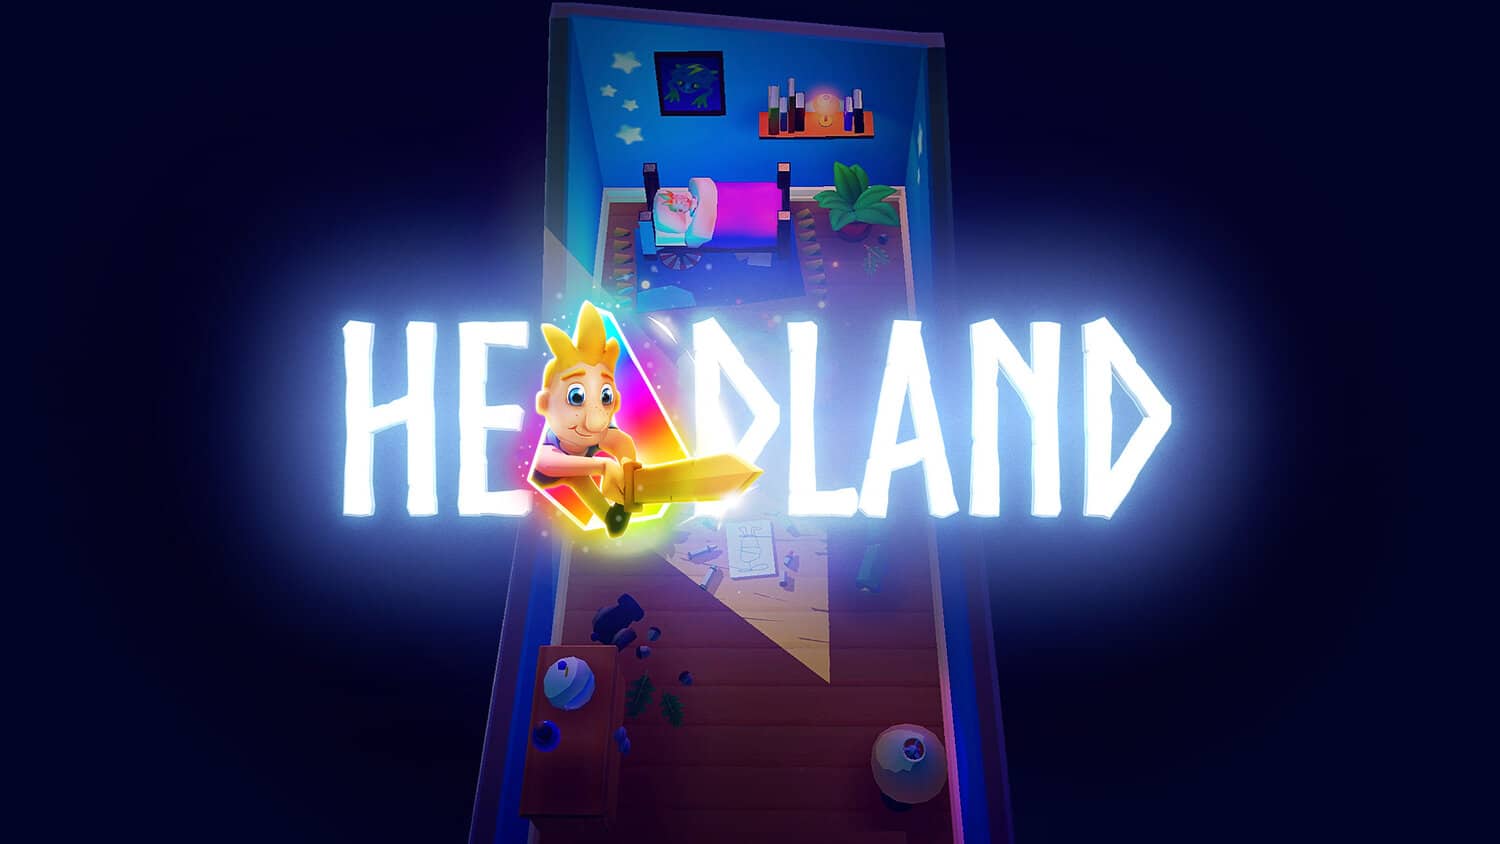 Headland releases next week